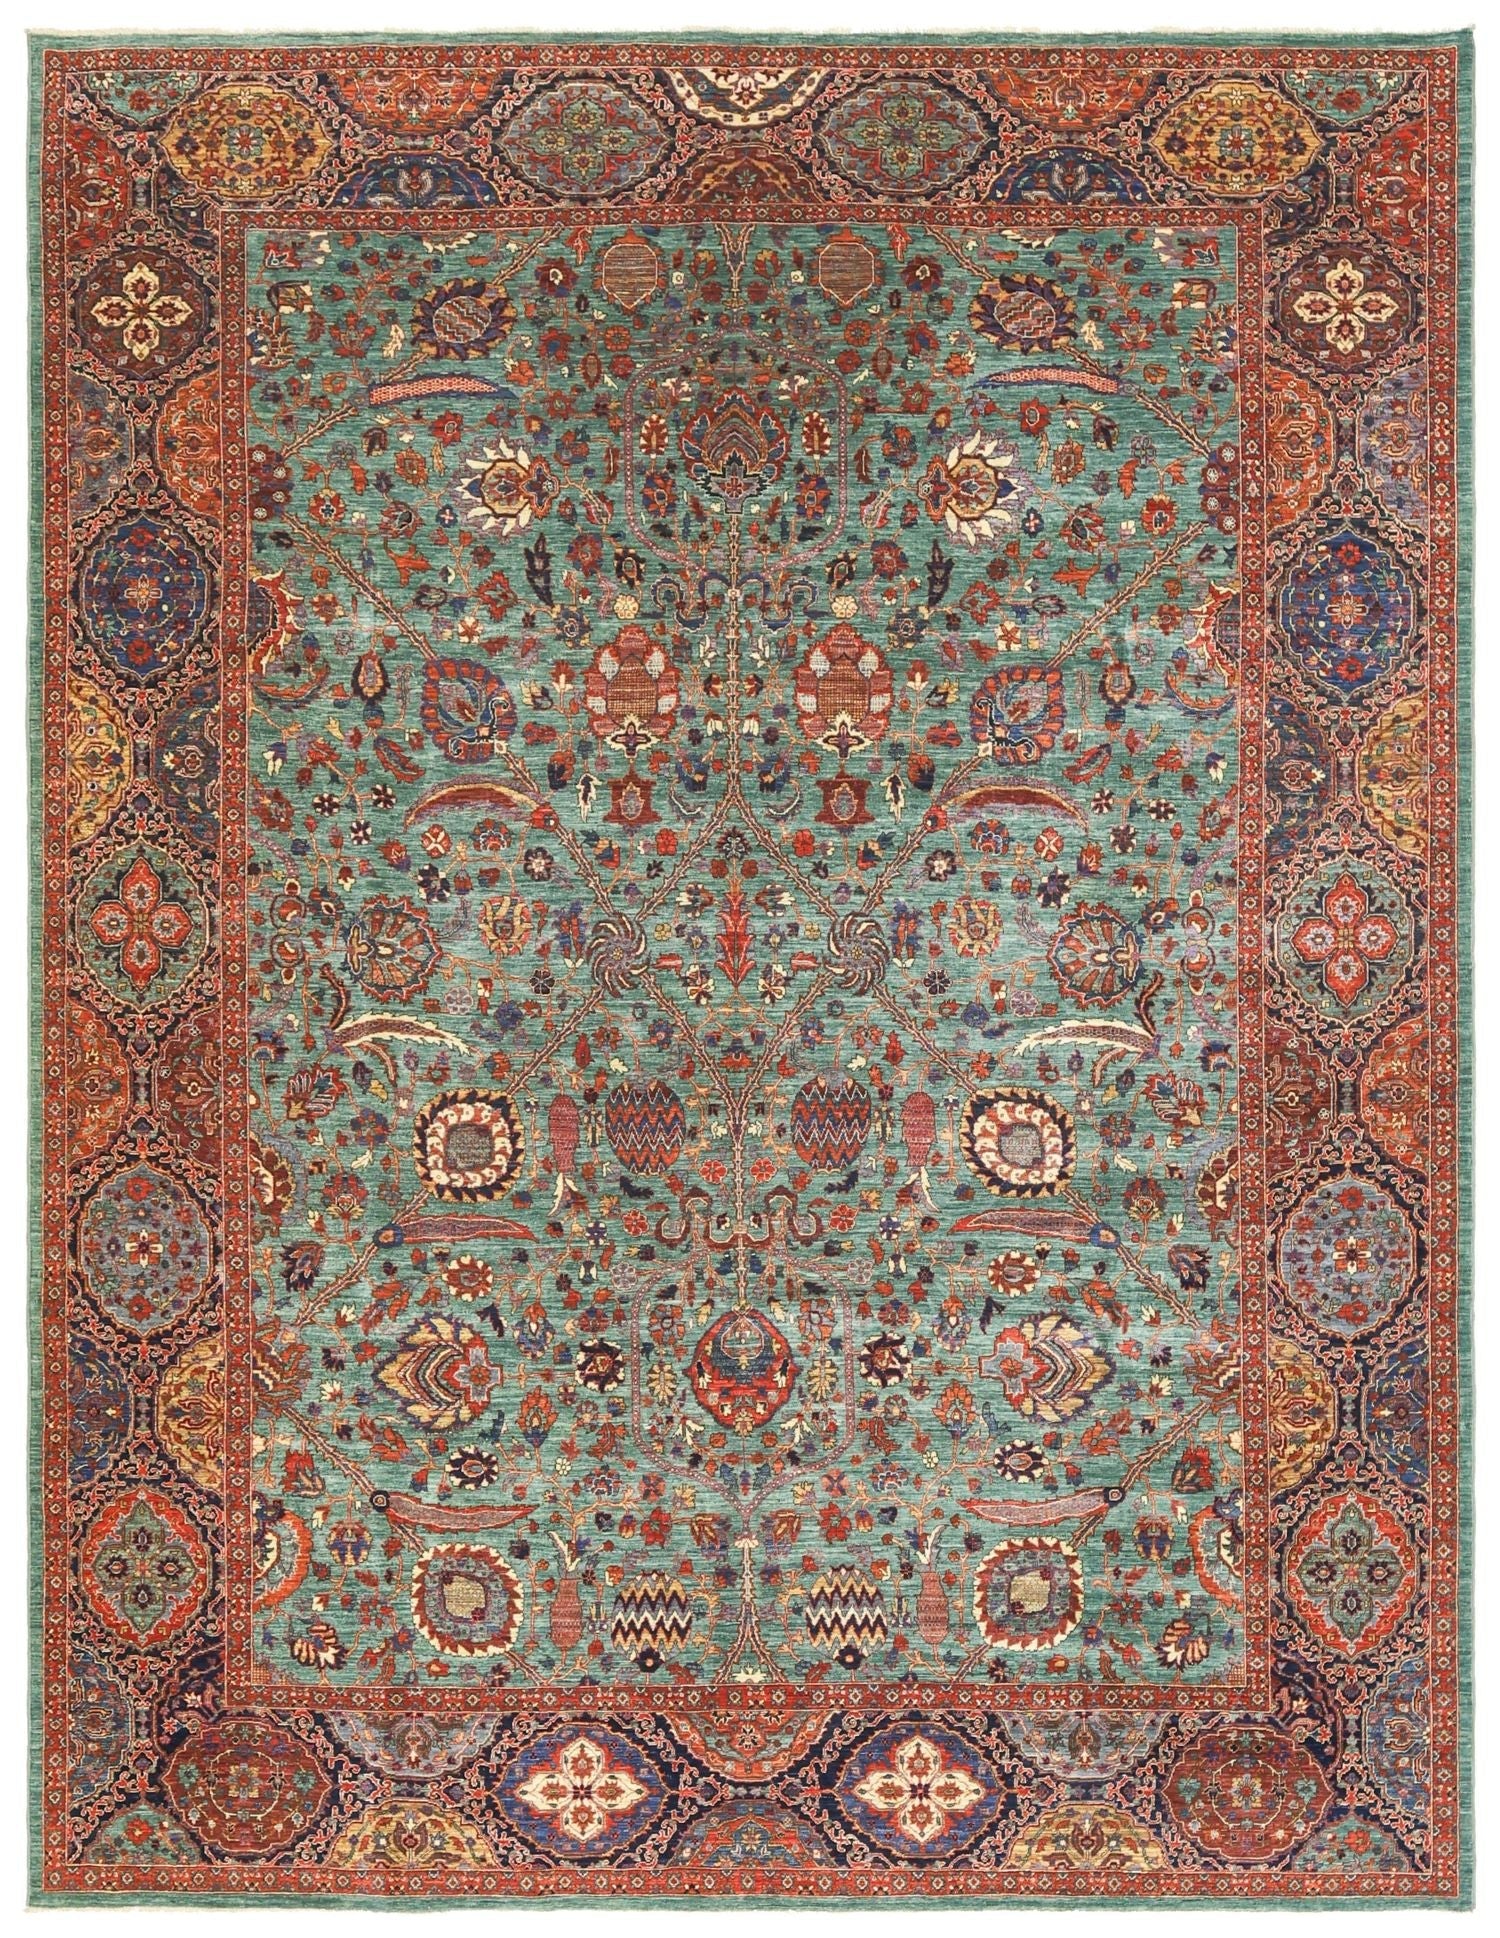 Vase Tabriz Handwoven Traditional Rug